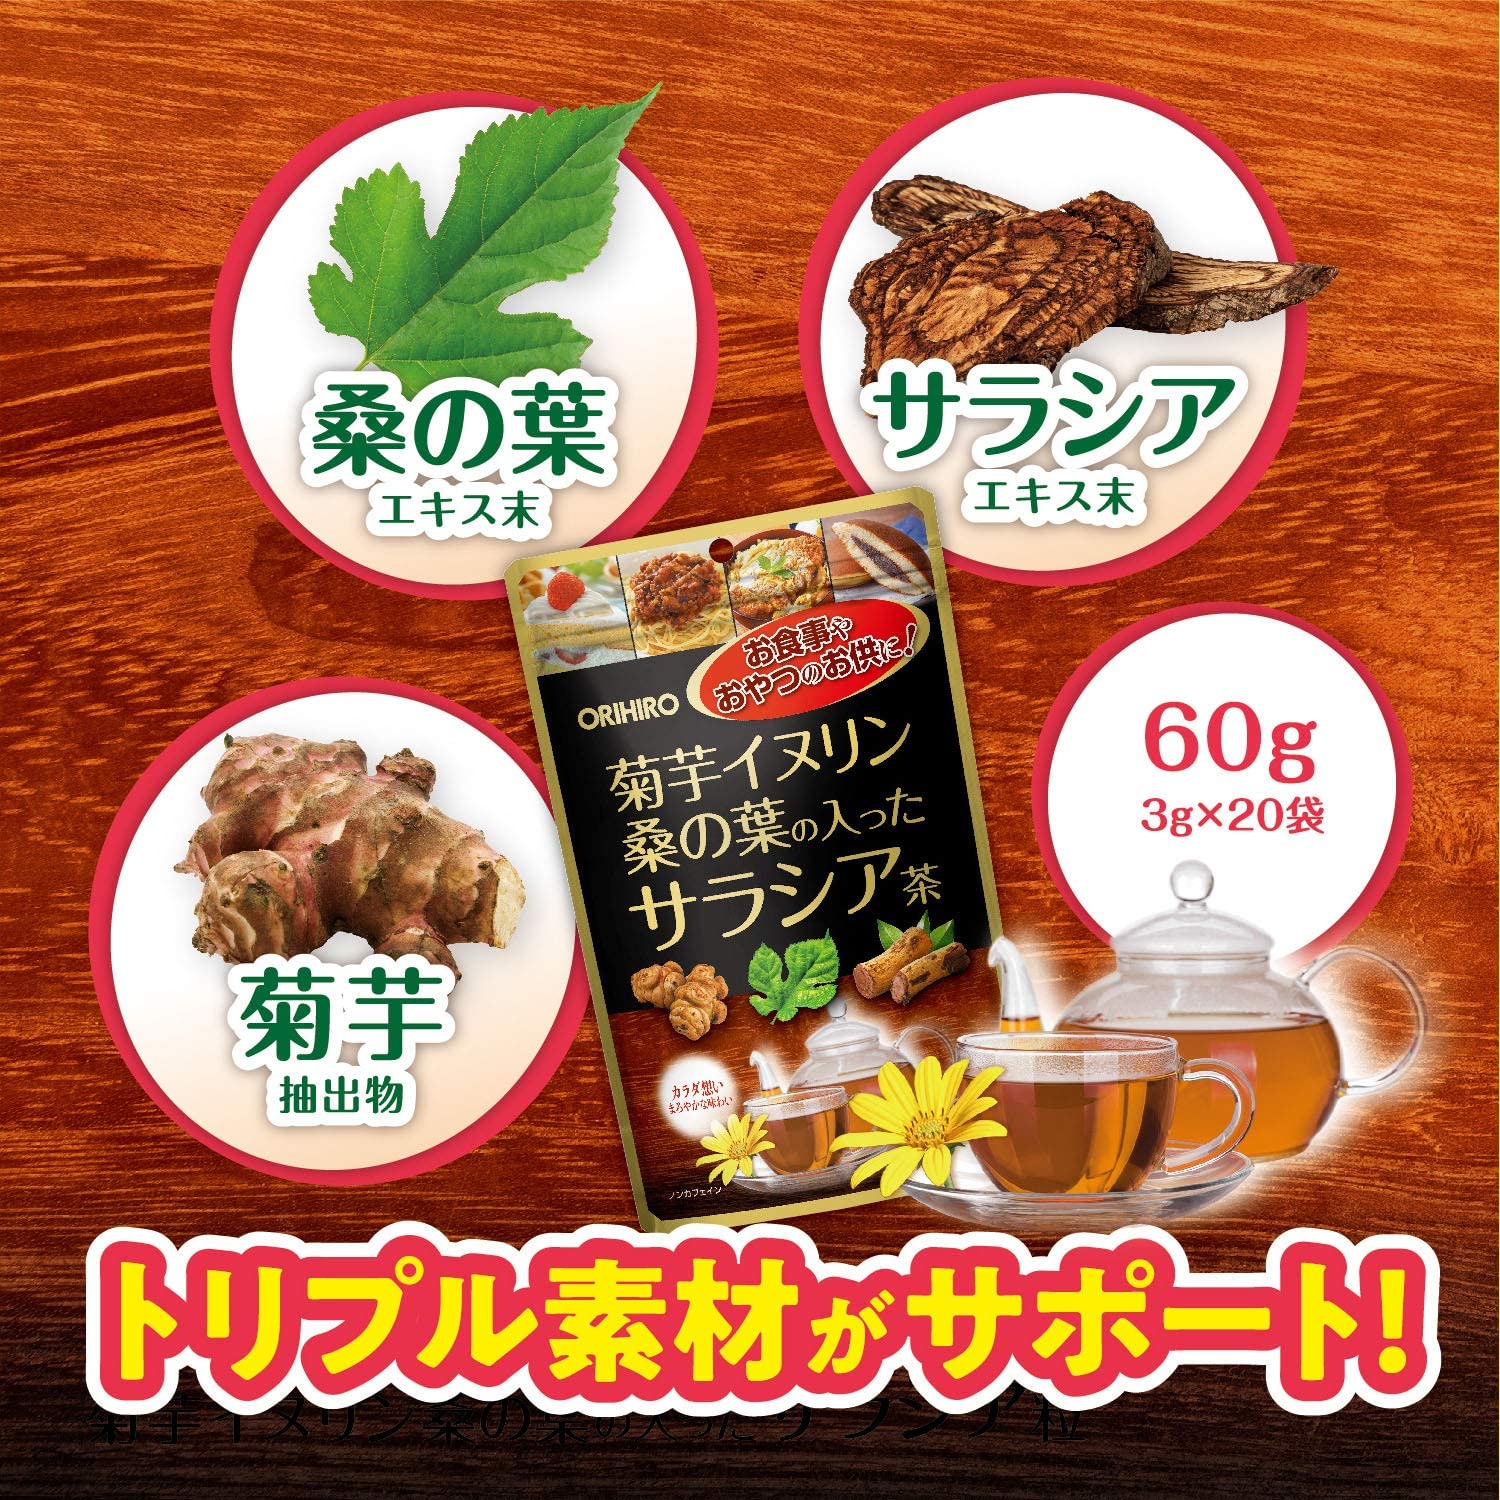 Orihiro Jerusalem artichoke Inulin 20 bags of Saracia tea with mulberry leaves